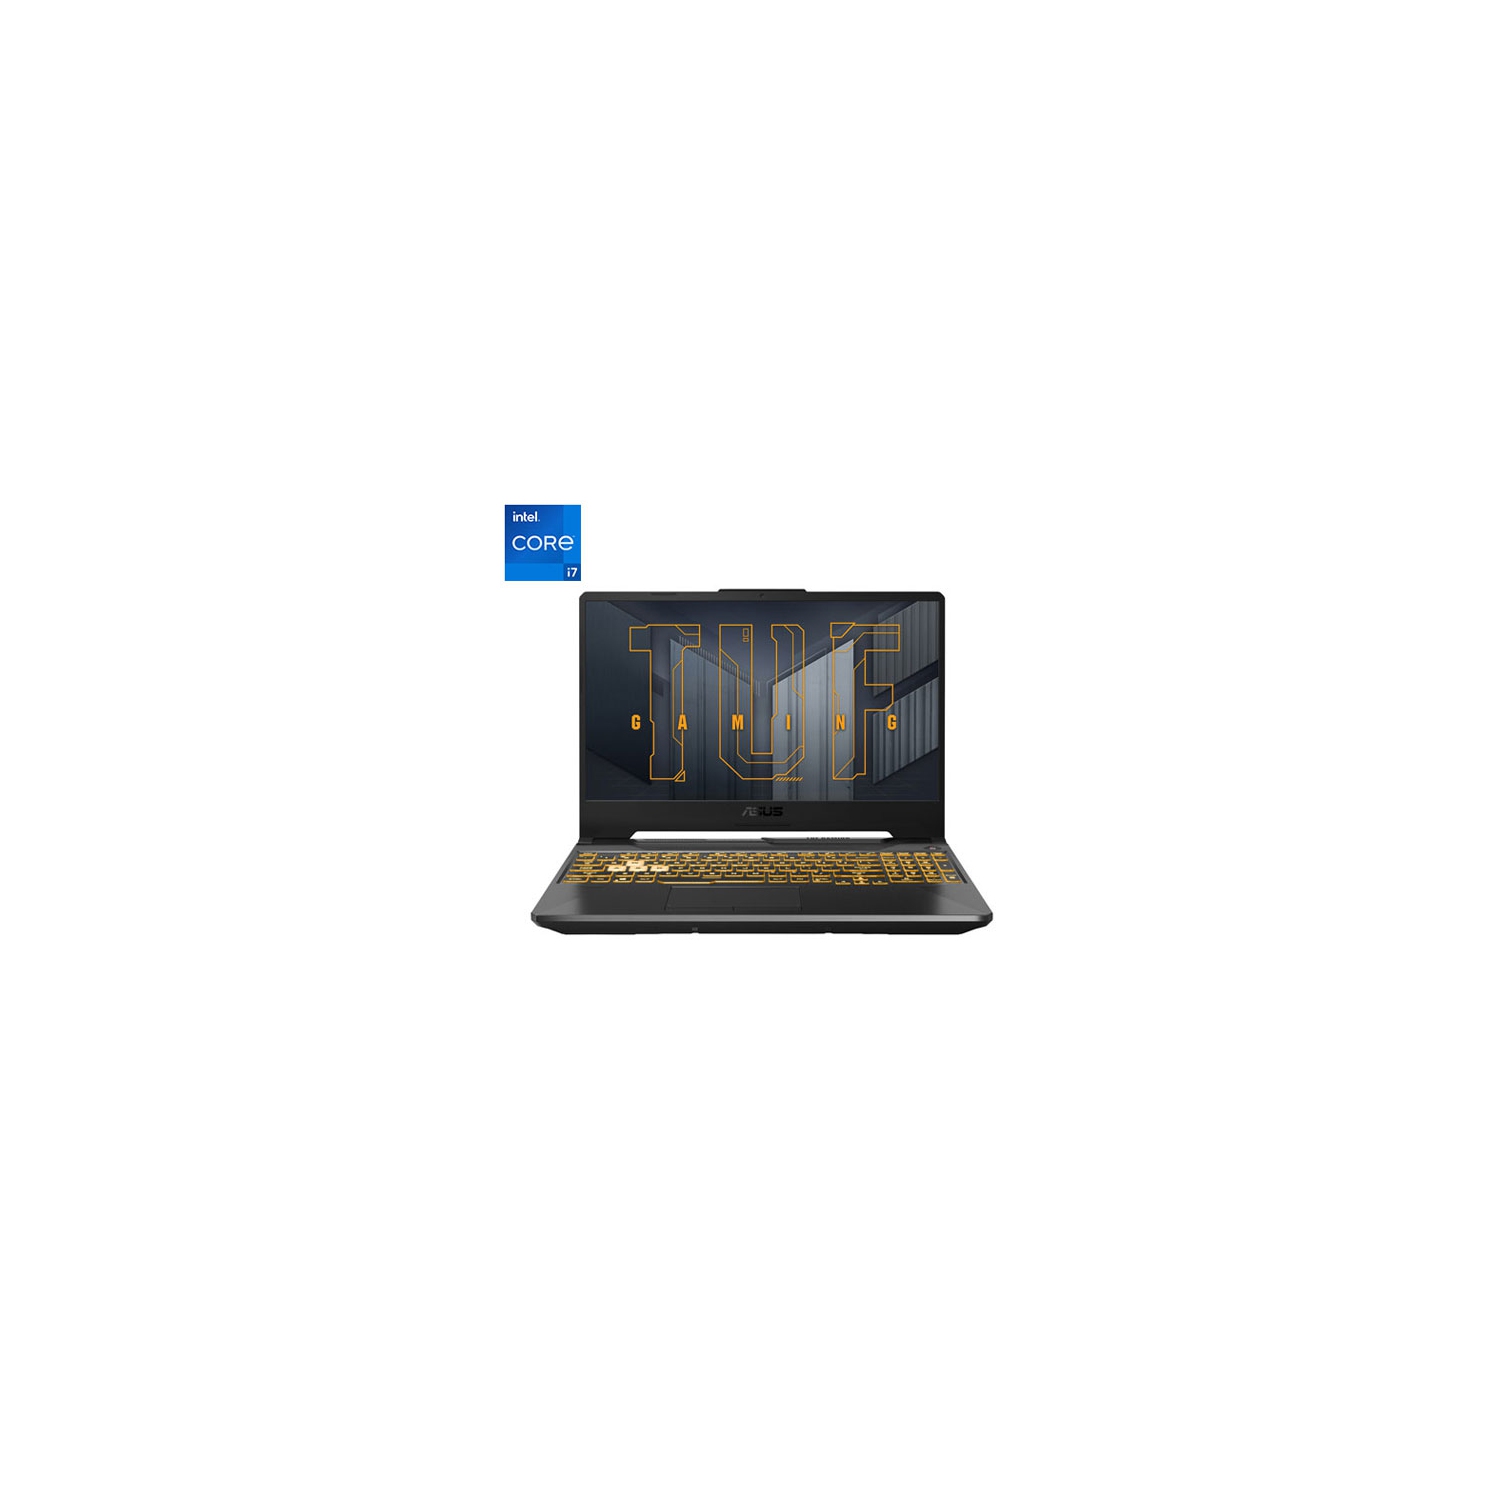 ASUS TUF F15 15.6" Gaming Laptop - Grey (Intel Core i7-11800H/512GB SSD/16GB RAM/RTX 3060/Win10) - Open Box